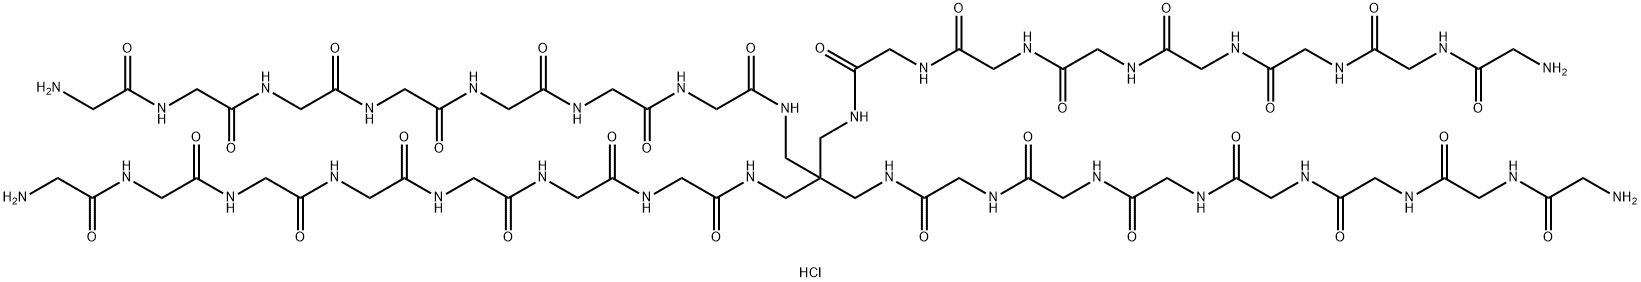 Glycylglycylglycylglycylglycylglycylglycine tetraamide with 2,2-bis(aminomethyl)-1,3-propanediamine Struktur